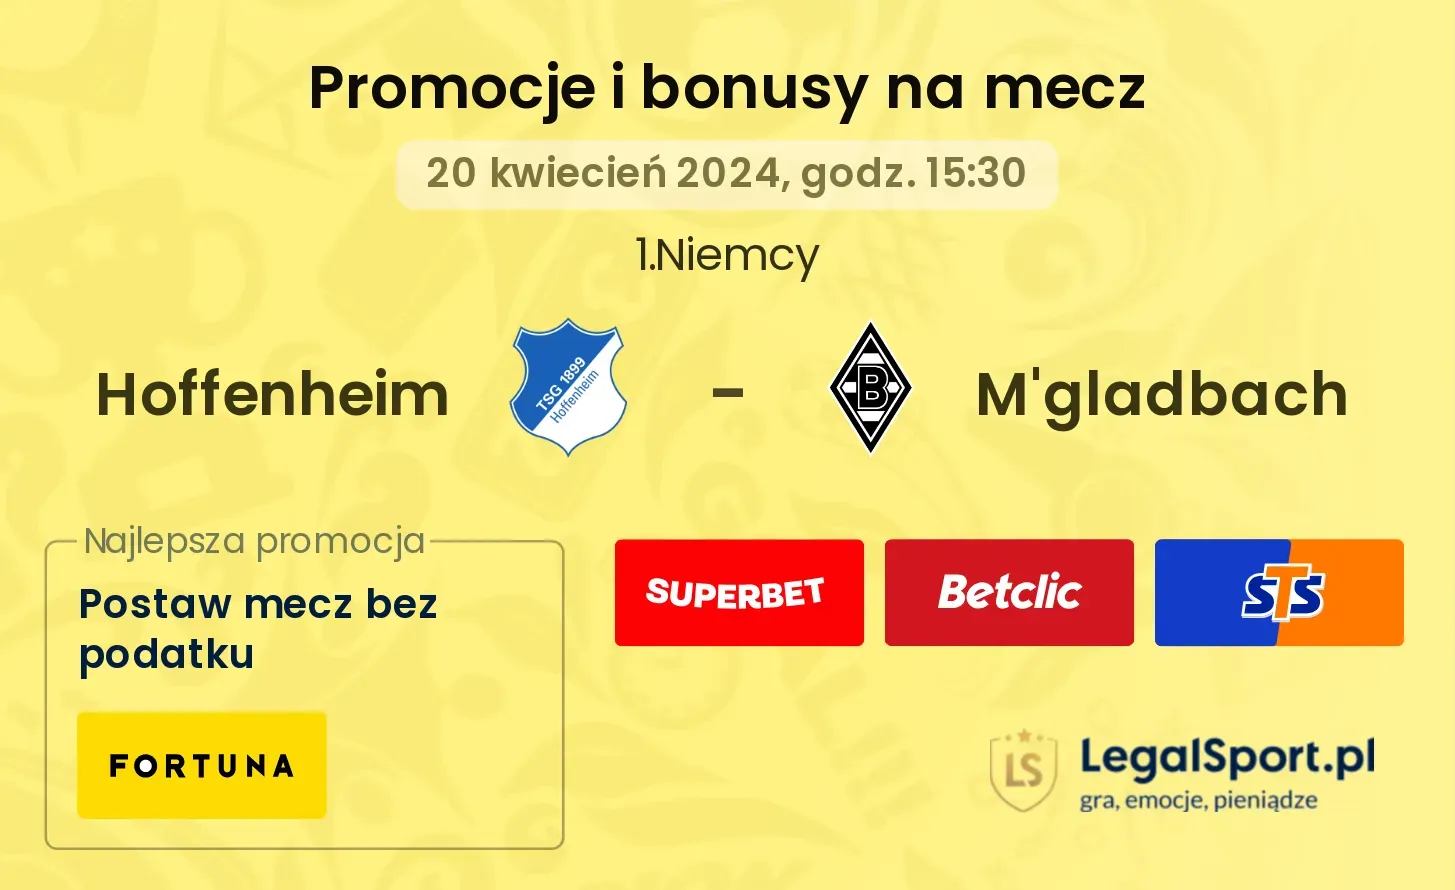 Hoffenheim - M'gladbach promocje bonusy na mecz